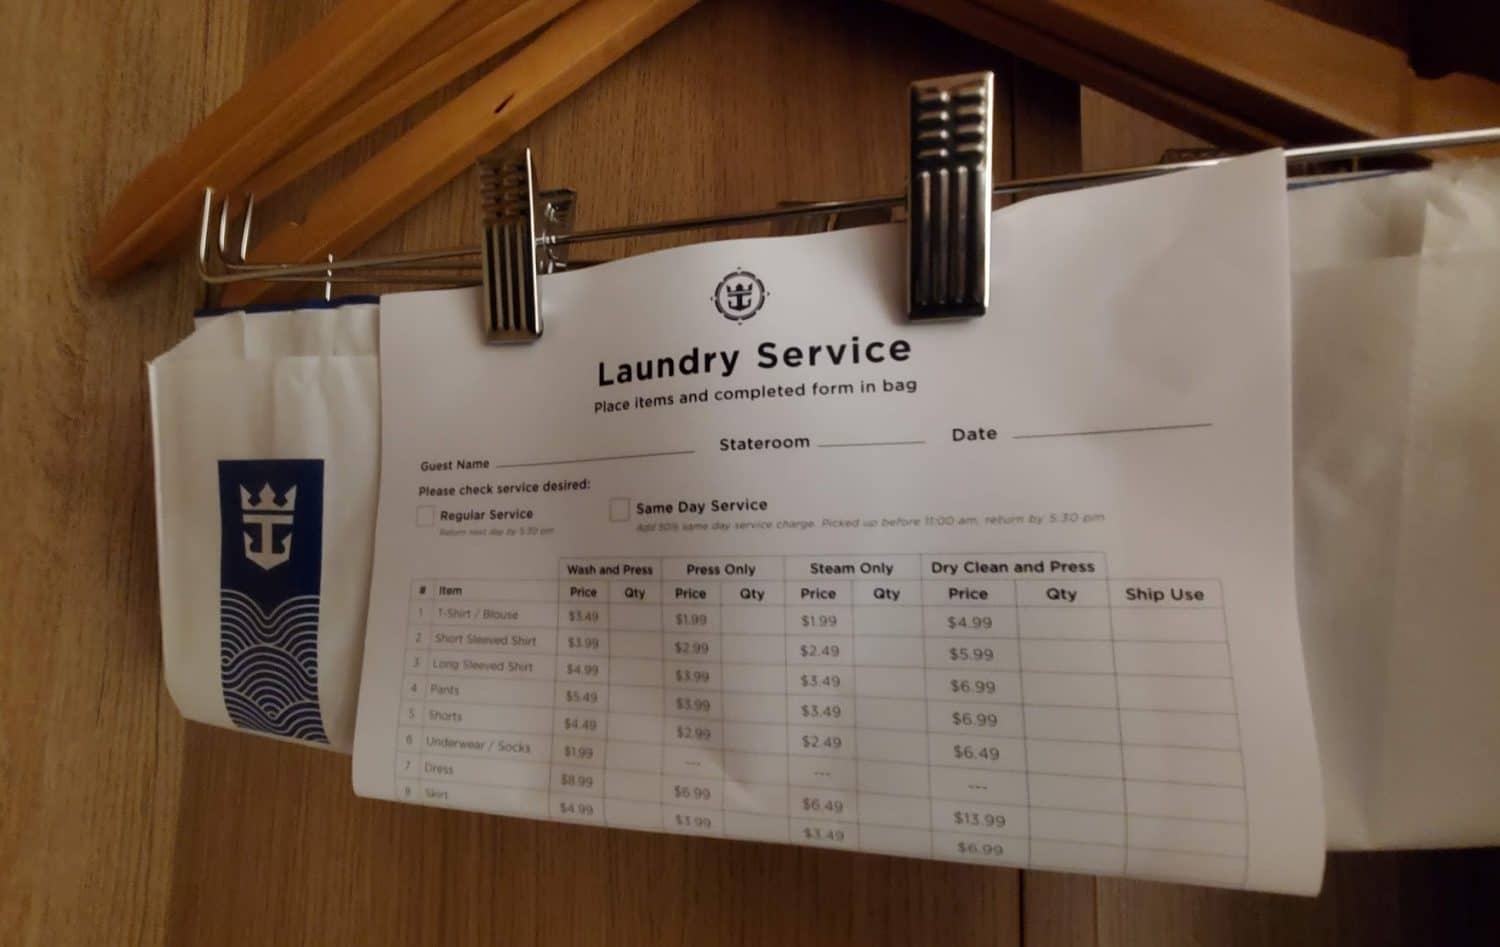 Royal Caribbean laundry pricing